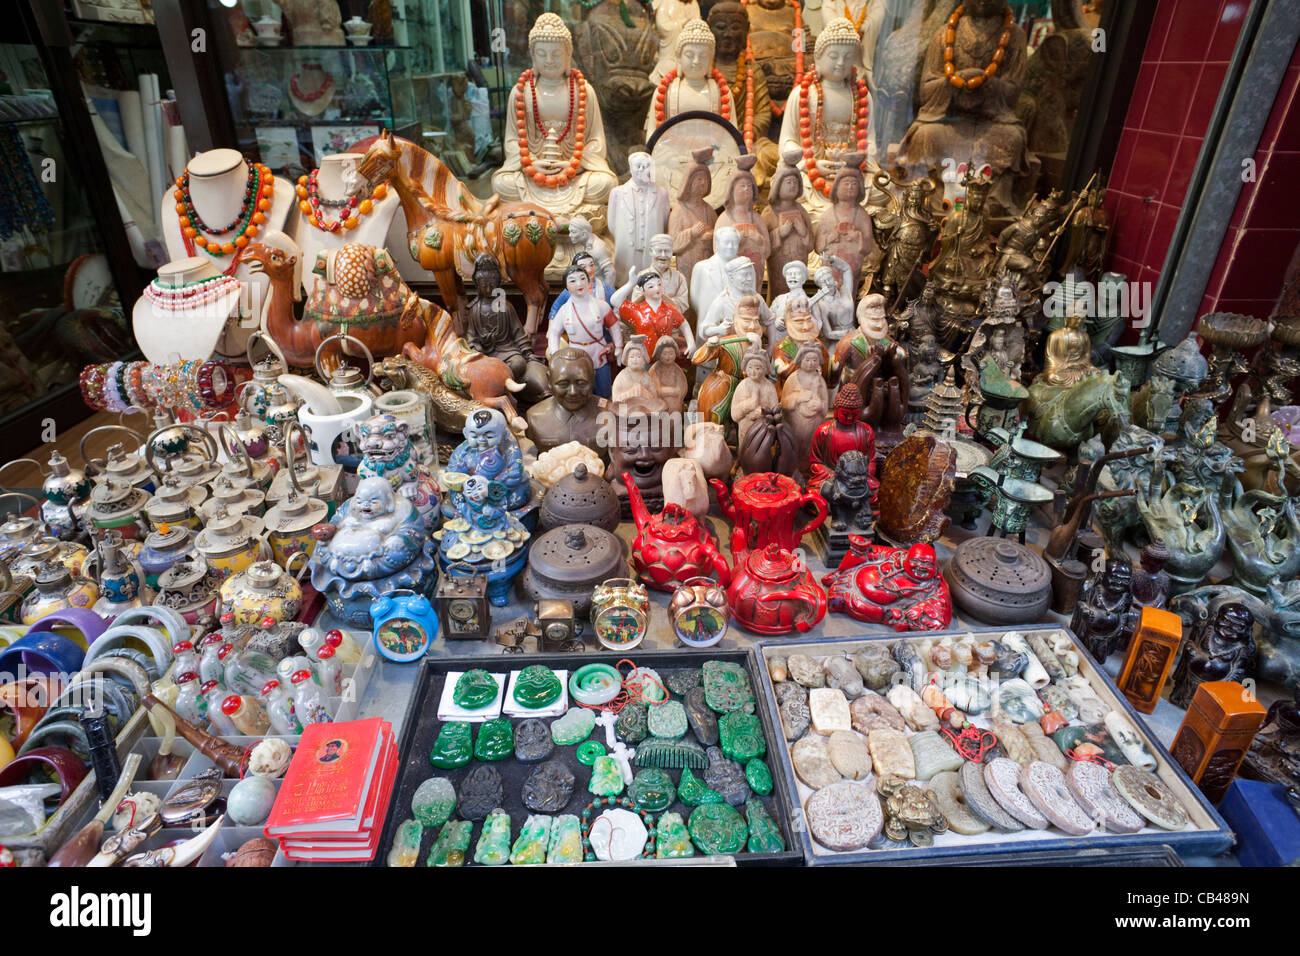 China, Hong Kong, Hollywood Road, Antique Shop Display in Cat Street Stock Photo